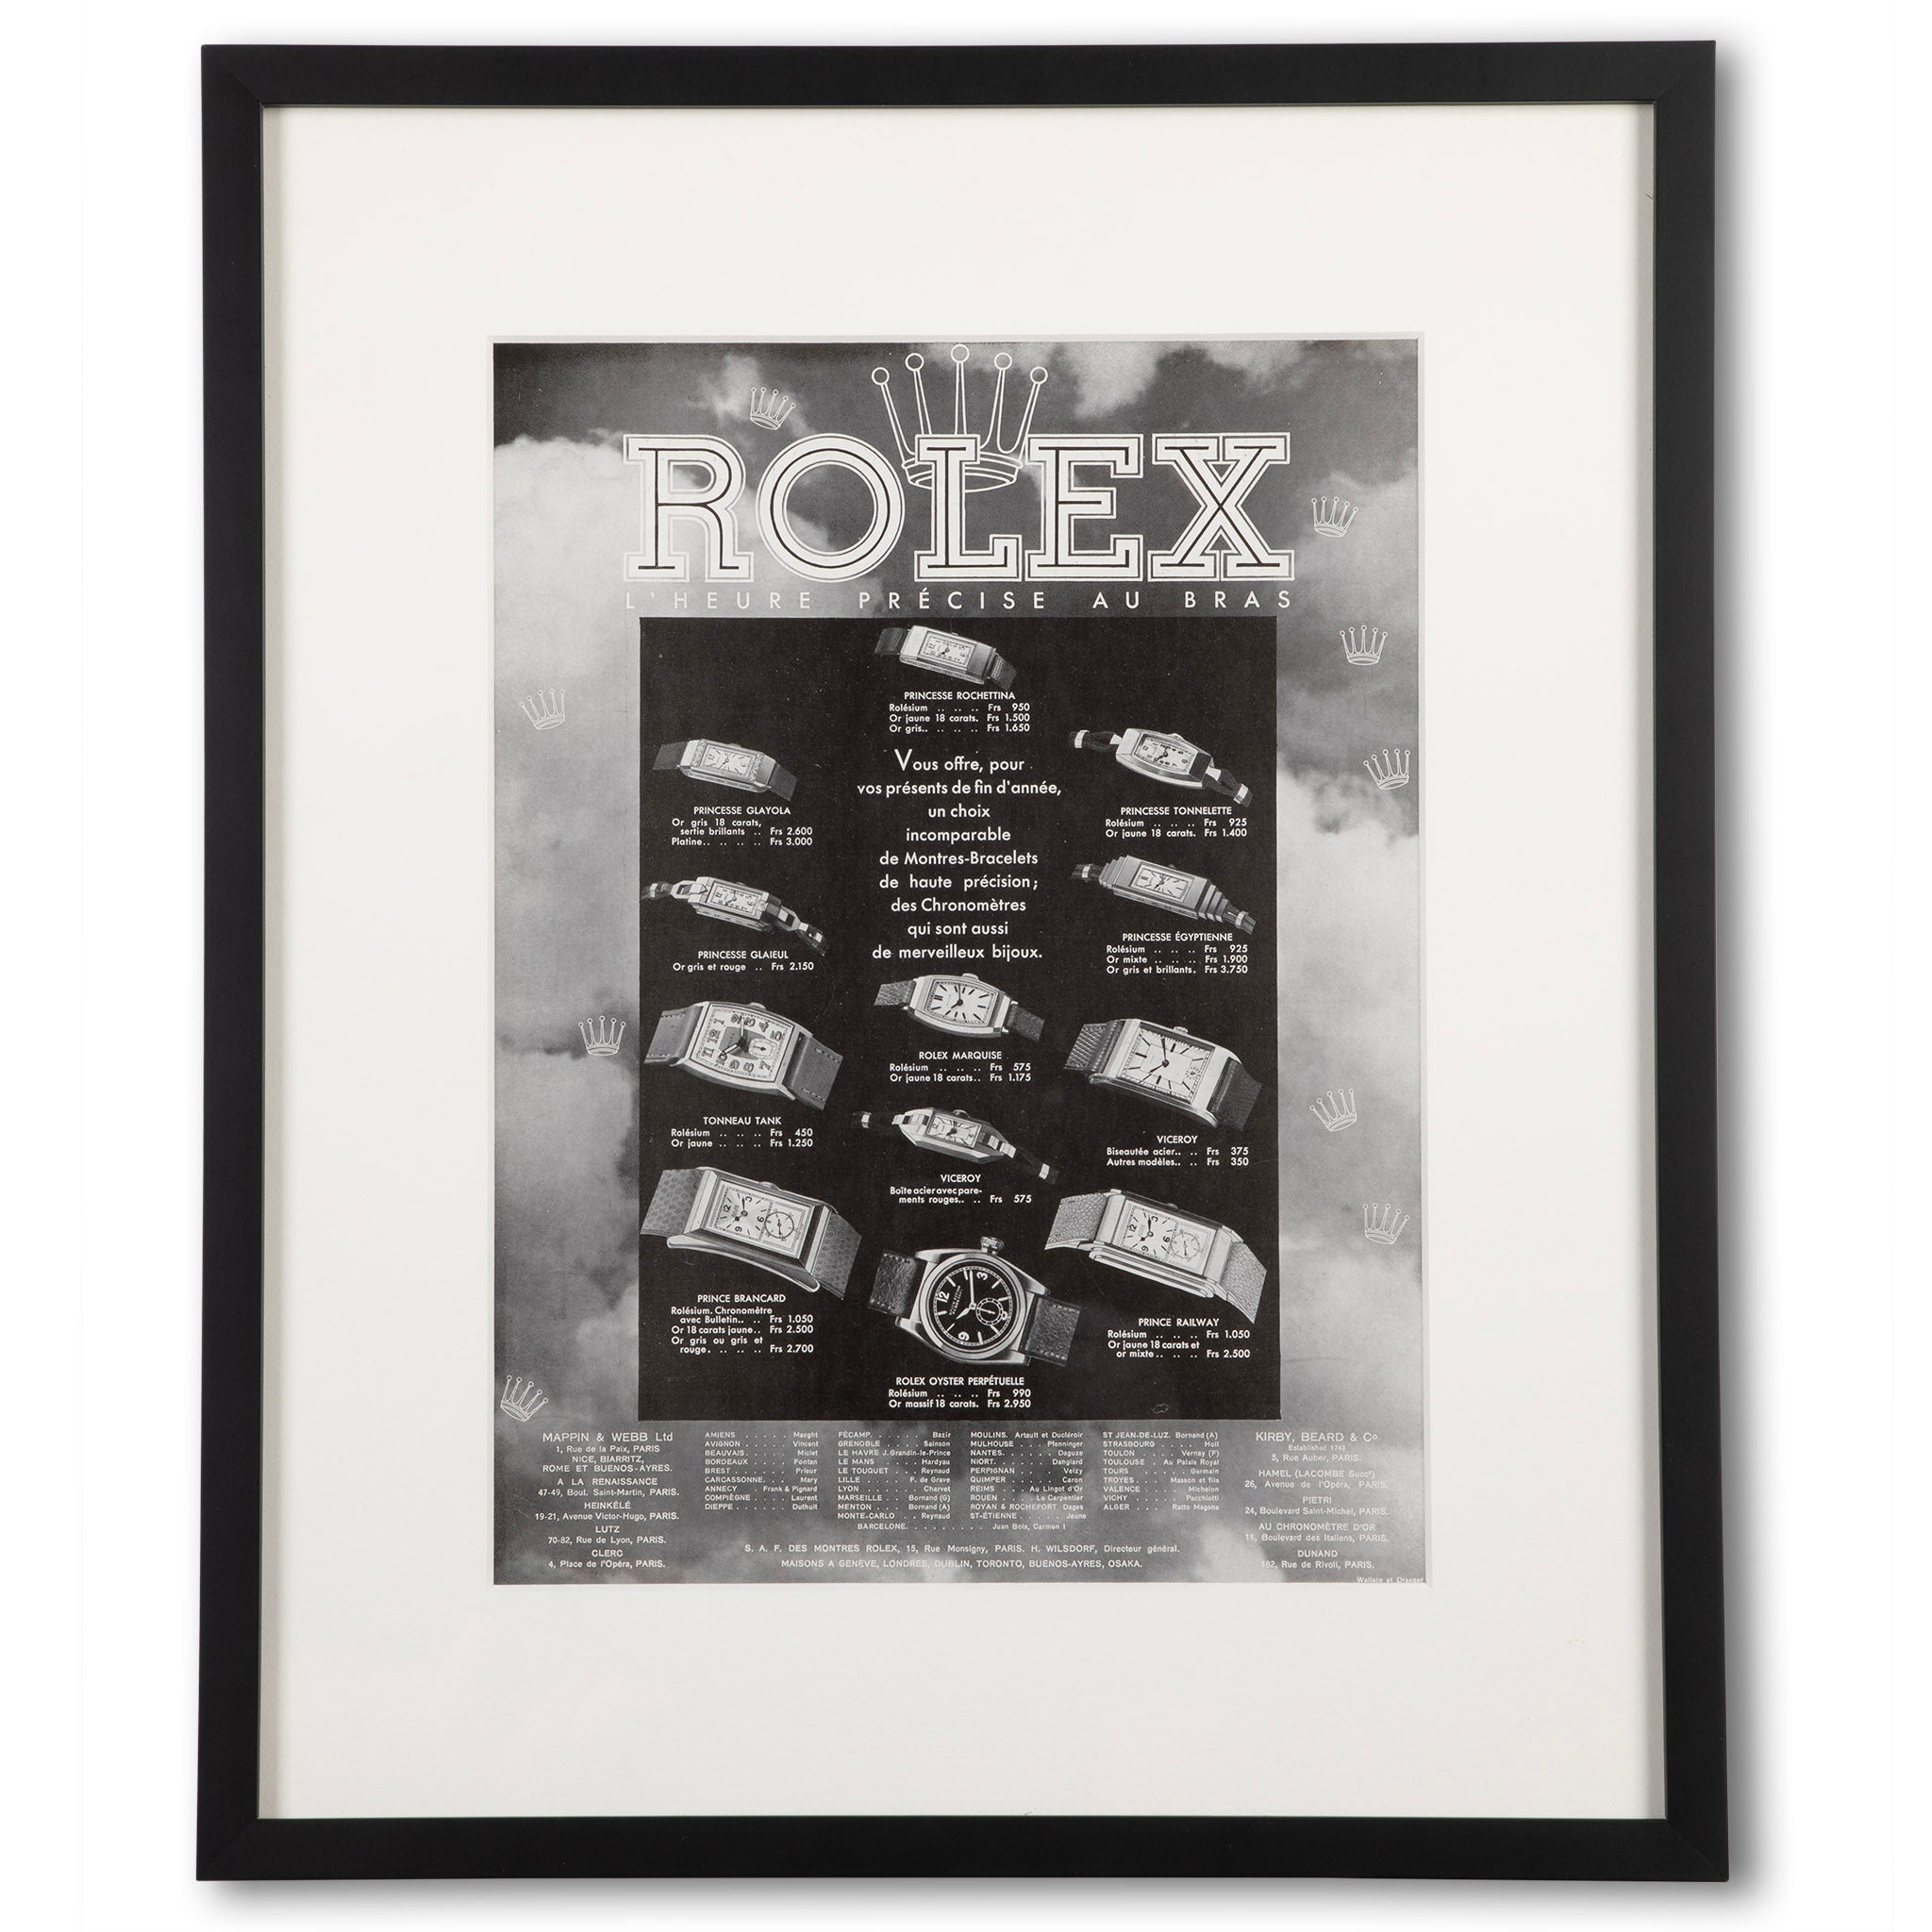 Framed Vintage Rolex Precise Time Advertisement 